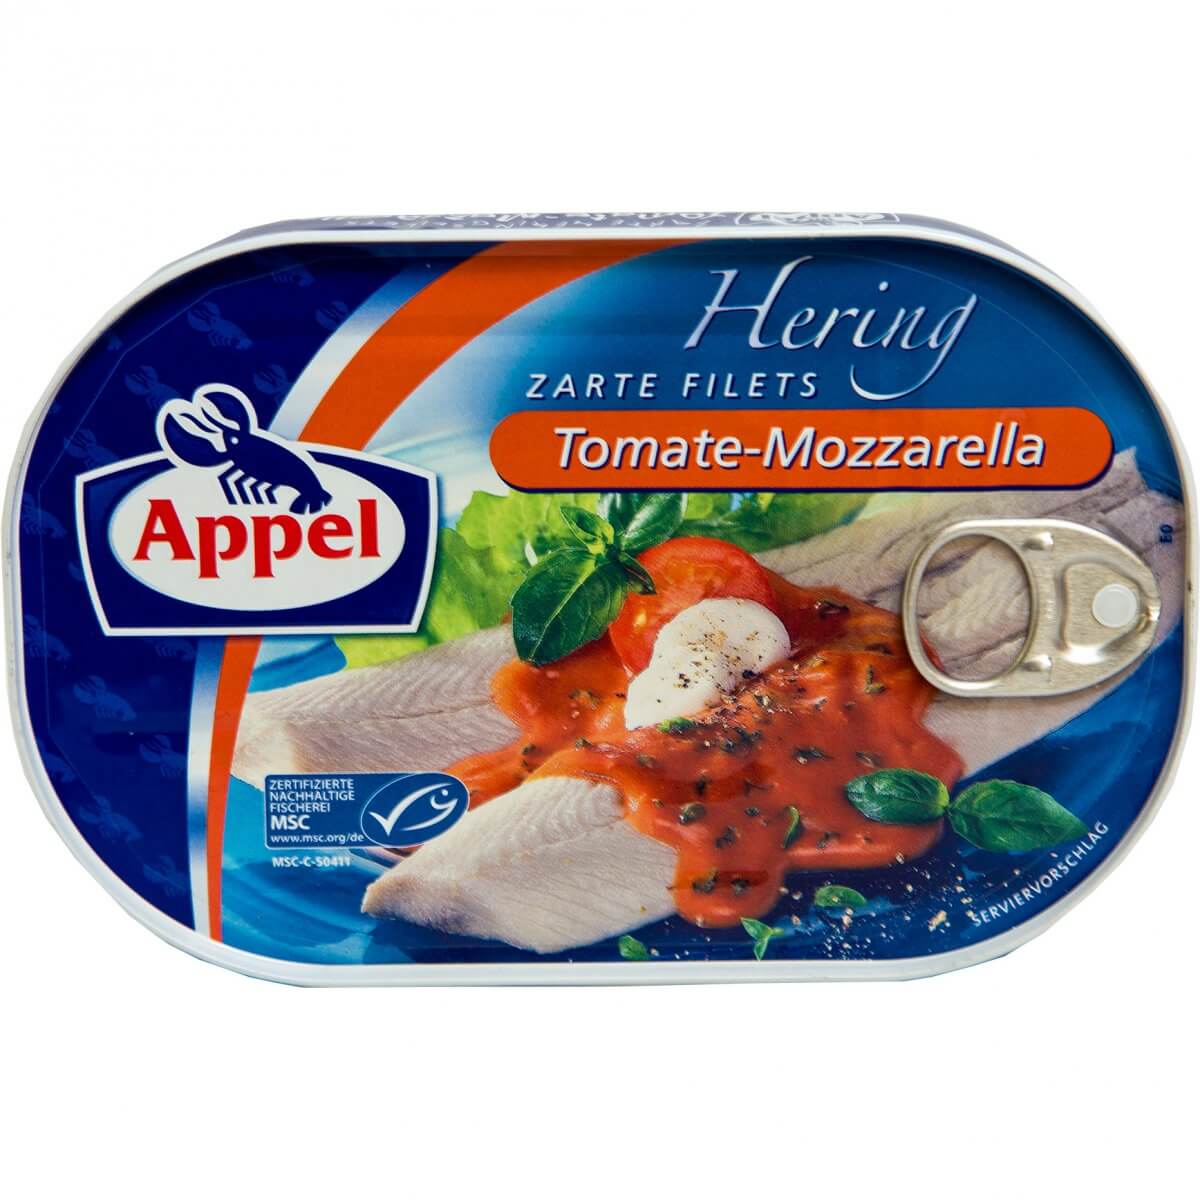 Appel Herring Zarte Filets 200g International Food Shop – Mozzarella Tomato